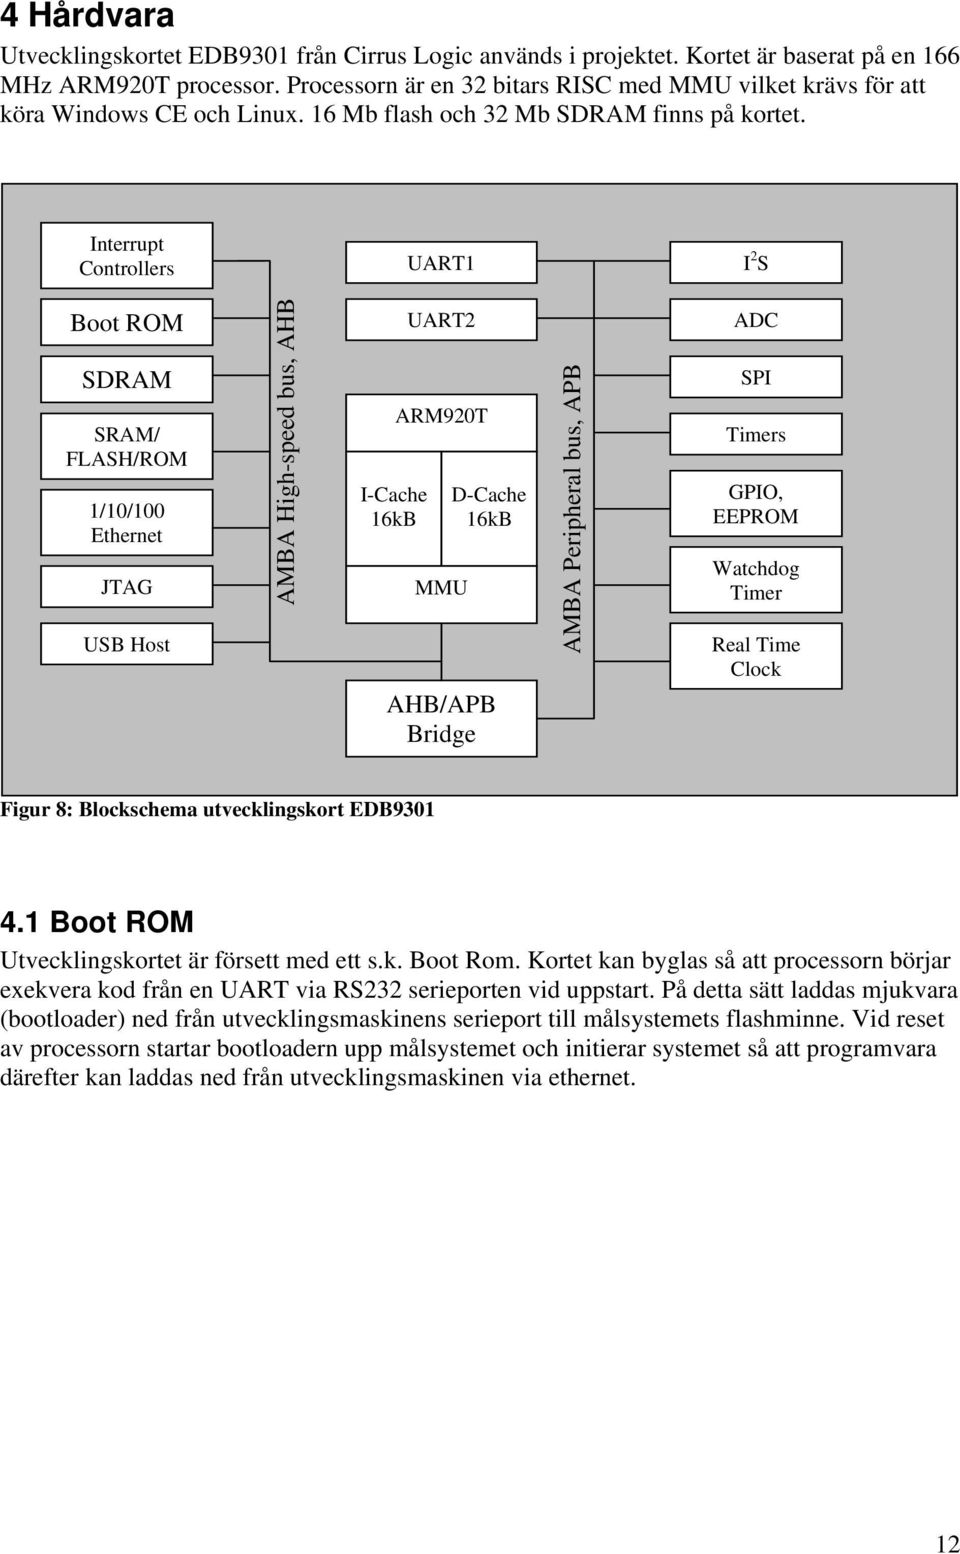 Interrupt Controllers UART1 I 2 S Boot ROM SDRAM SRAM/ FLASH/ROM 1/10/100 Ethernet JTAG USB Host AMBA High-speed bus, AHB I-Cache 16kB UART2 ARM920T MMU D-Cache 16kB AHB/APB Bridge AMBA Peripheral